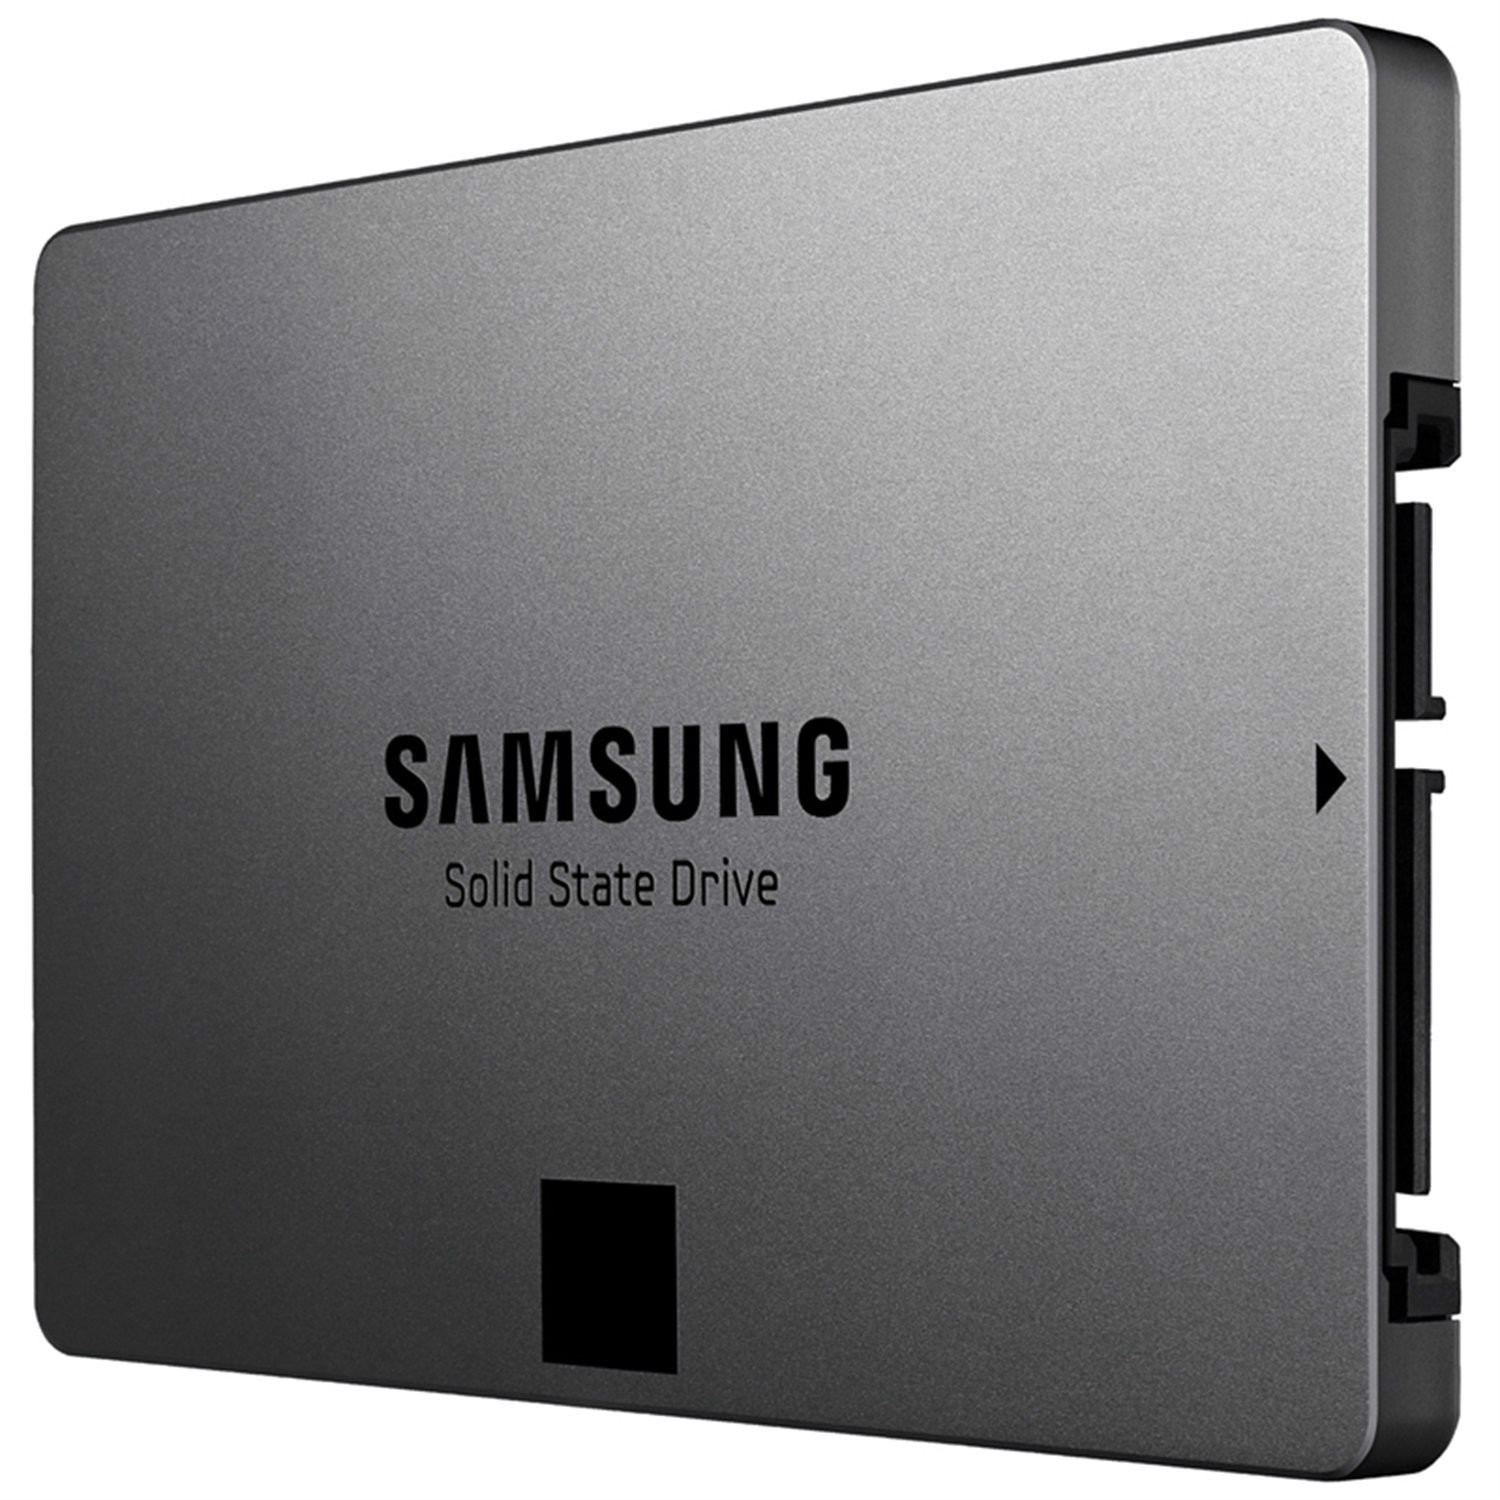 三星SSD 840 EVO(1TB)